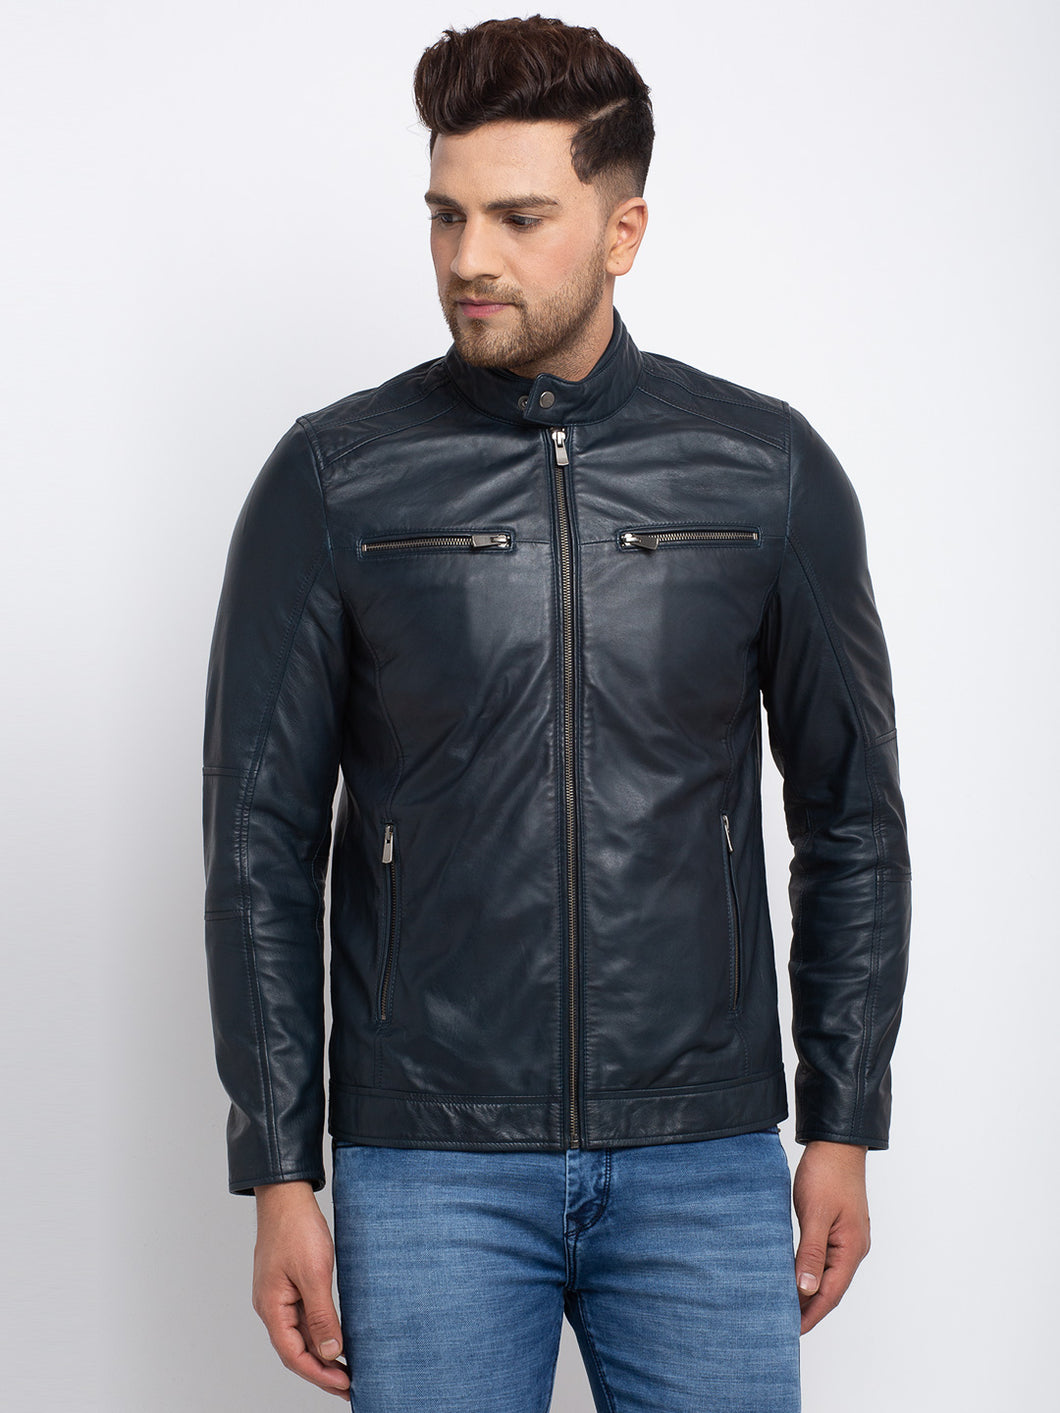 Teakwood Leathers  Men's 100% Genuine Navy Blue Leather Jacket